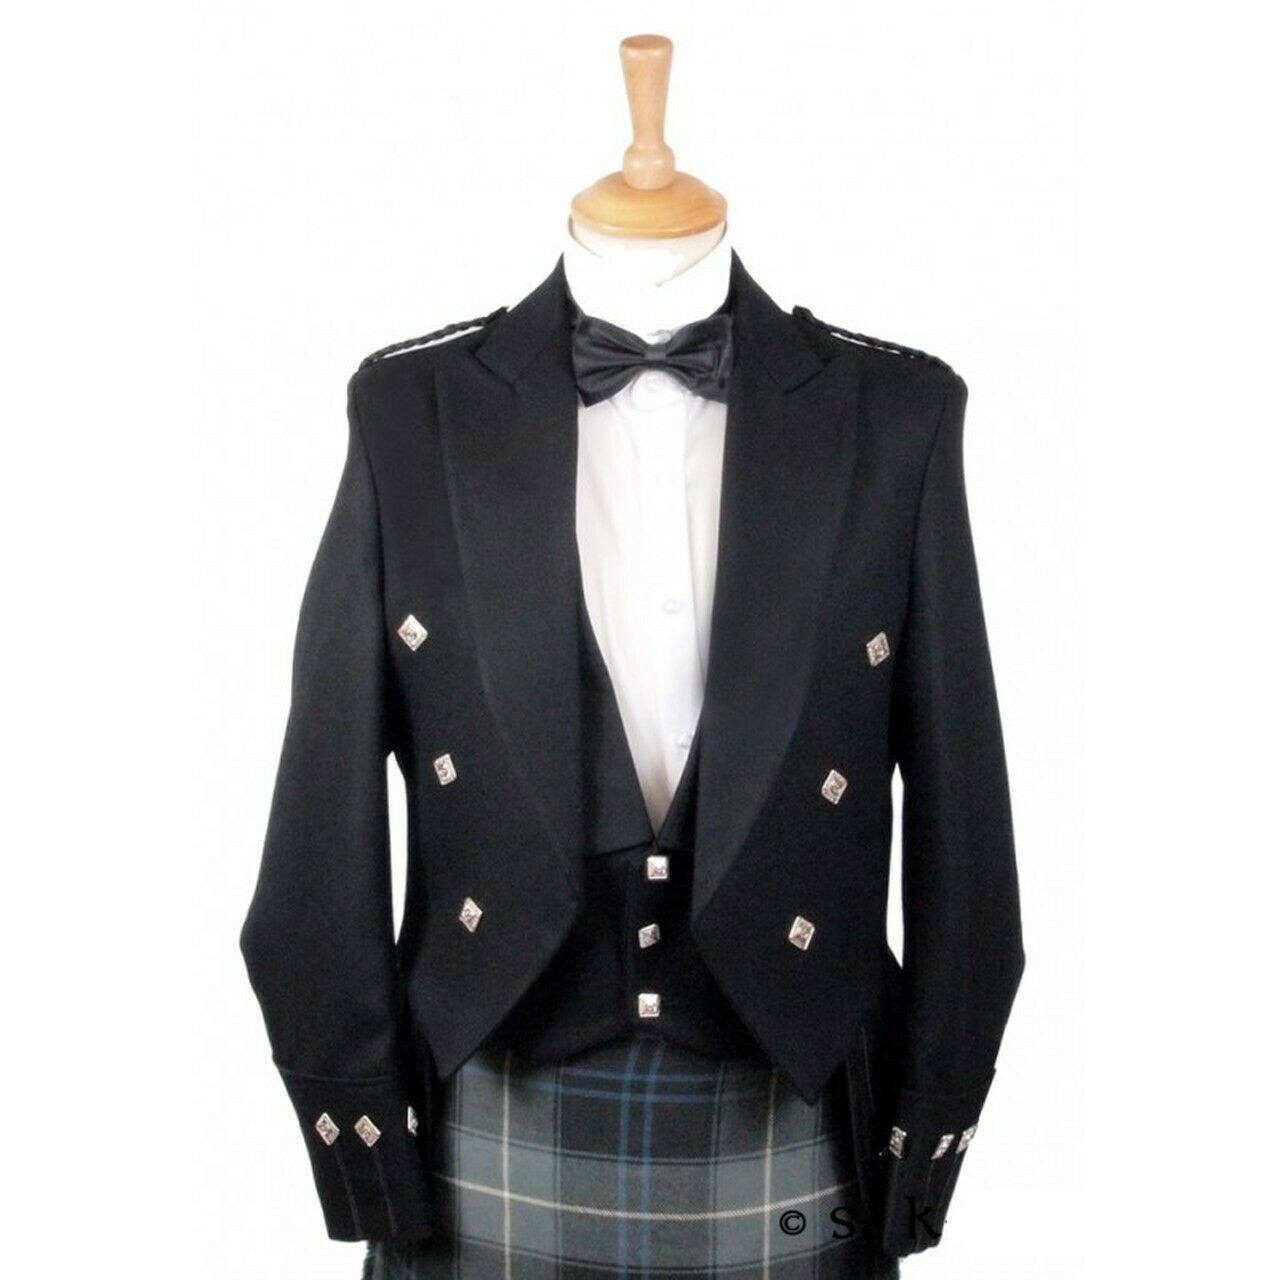 Regulation Doublet Kilt Jacket With Waistcoat - Scottish Kilt Collection